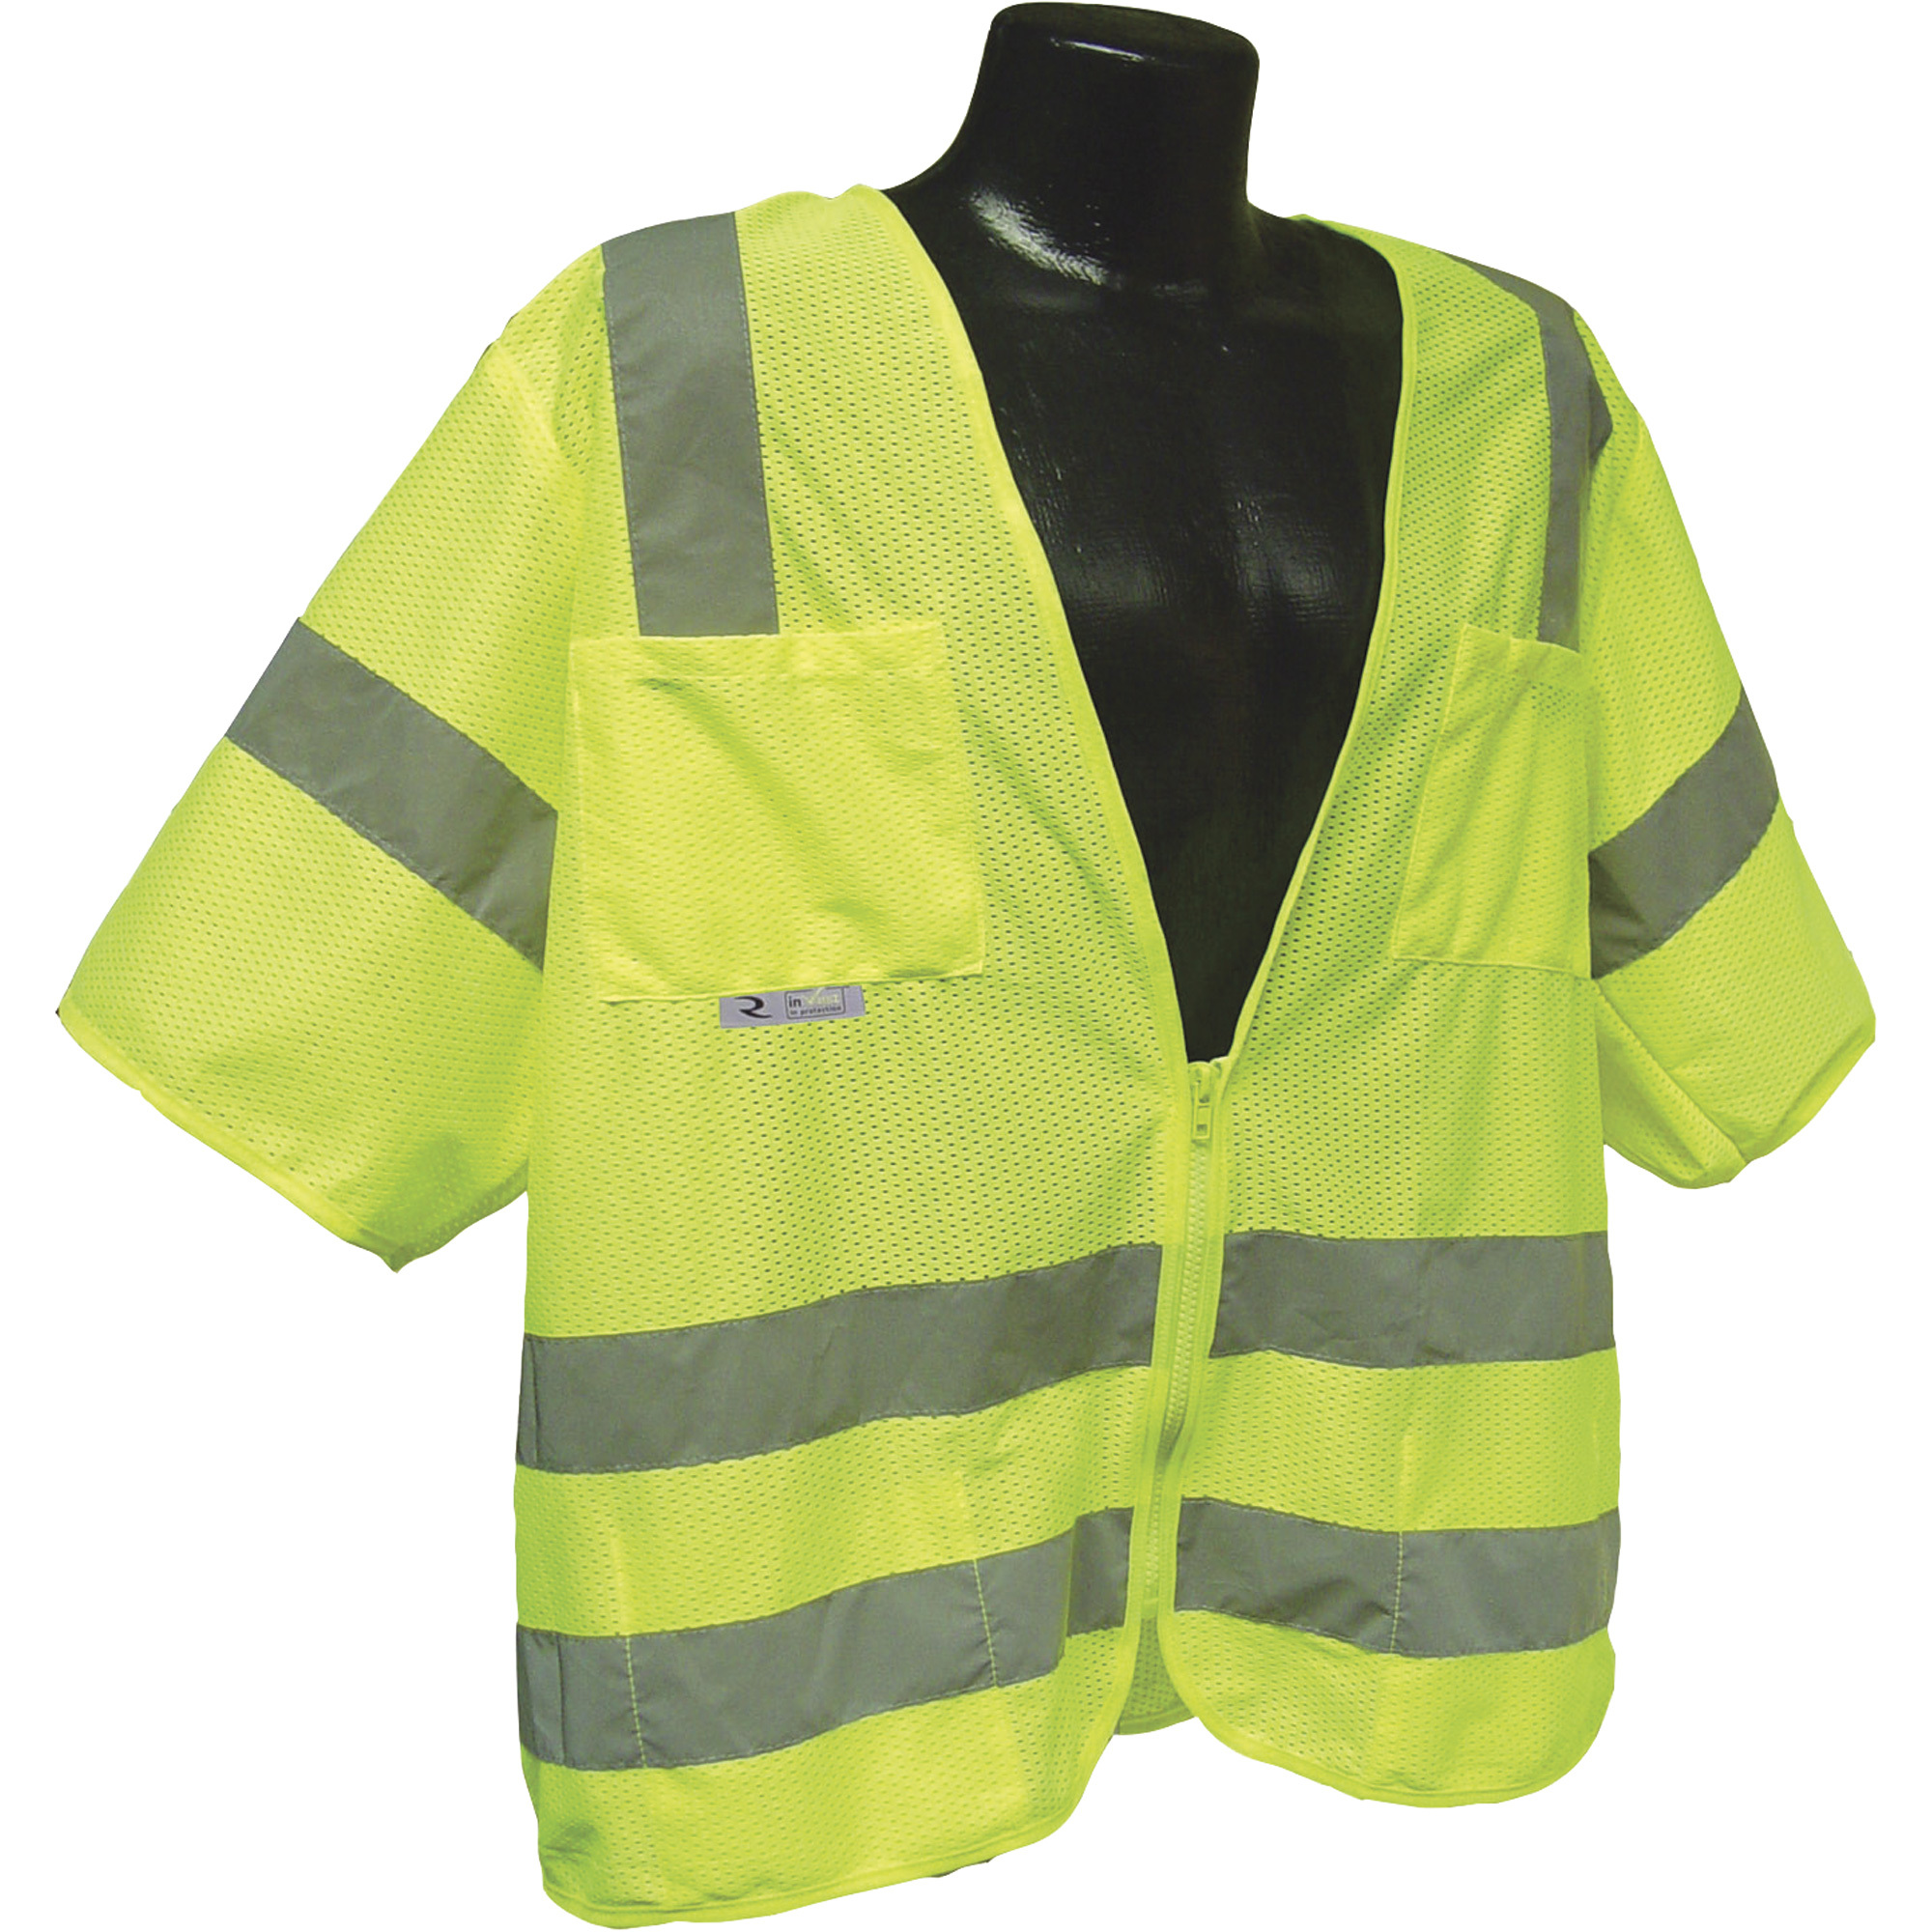 Radians Men's Class 3 High Visibility Short Sleeve Mesh Safety Vest â Lime, Large, Model SV83GM